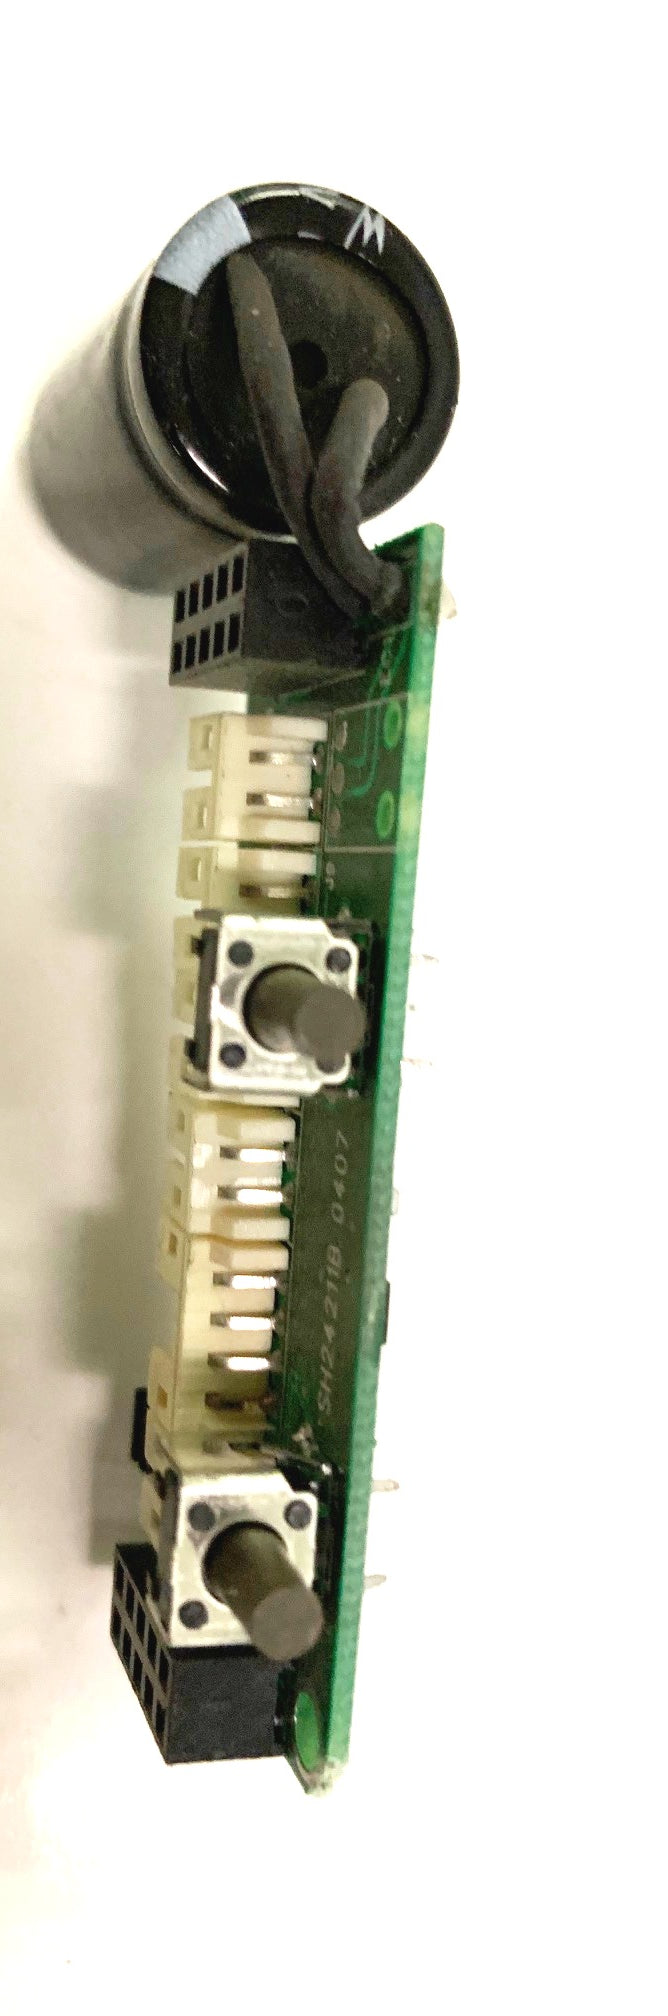 Diablo Mongoose LCD Paintball Gun Stock Replacement IC Electronic Circuit Board